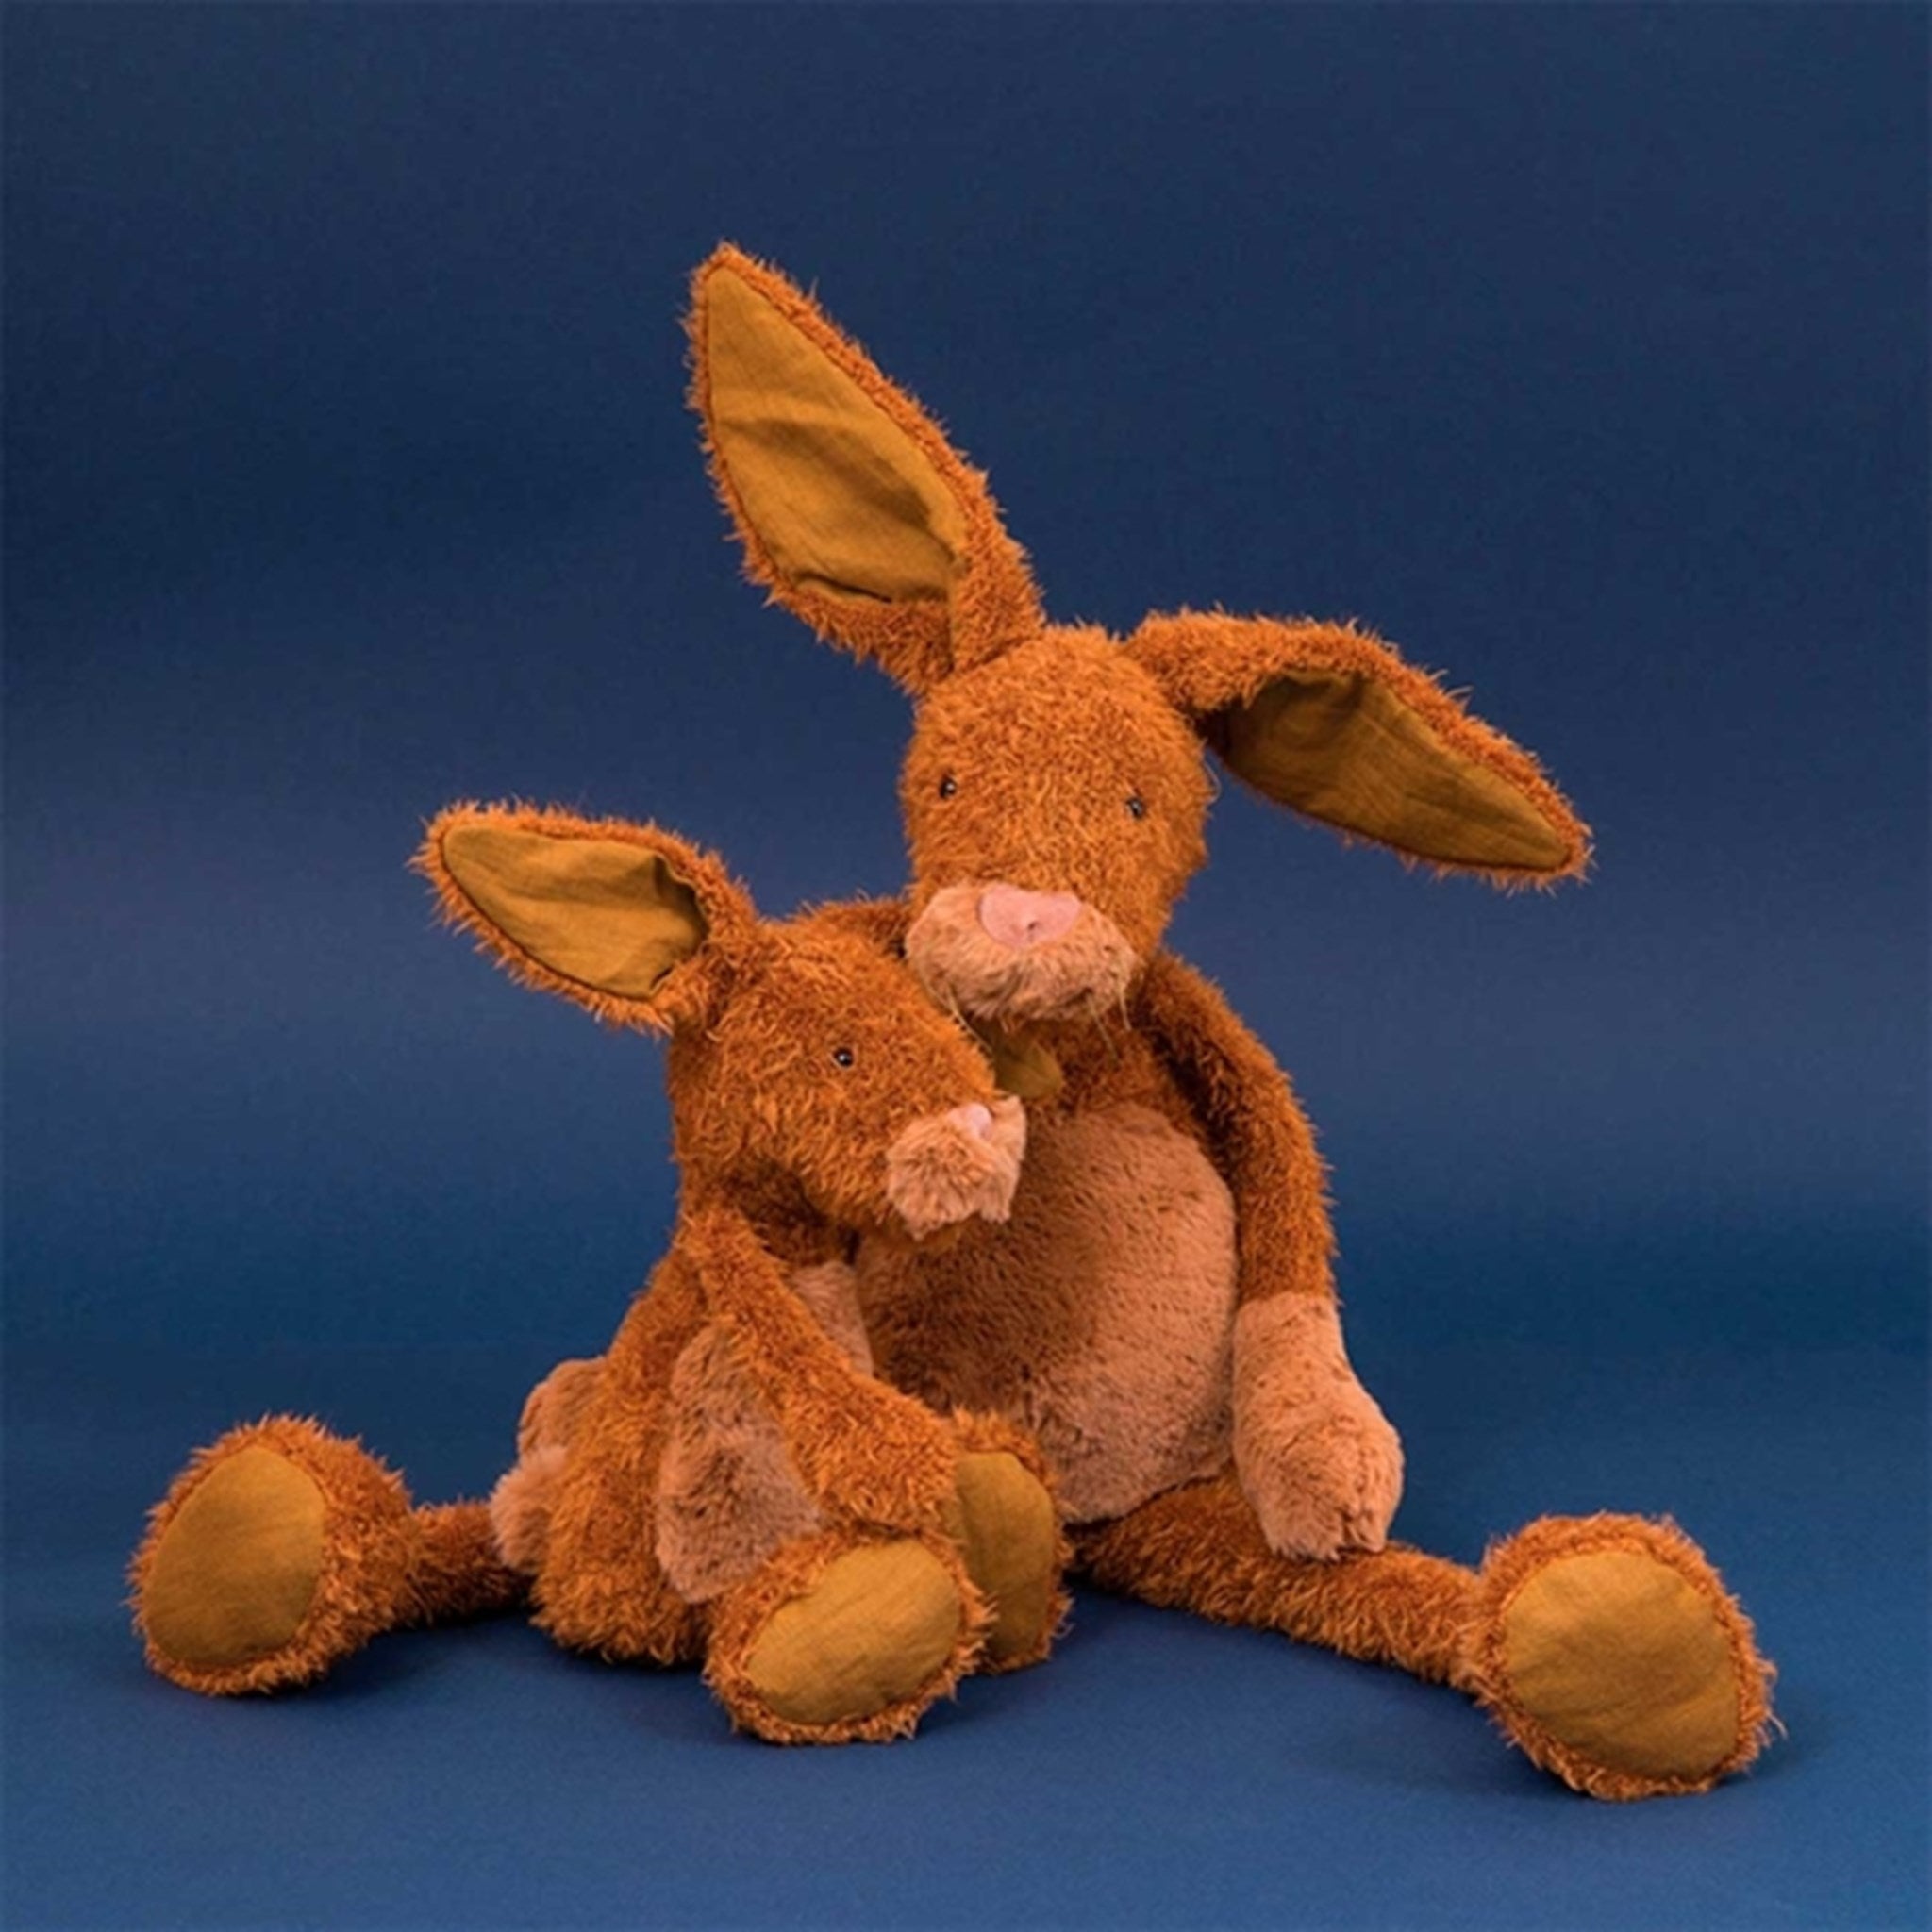 Moulin Roty Stuffed Animal - Big Rabbit 2